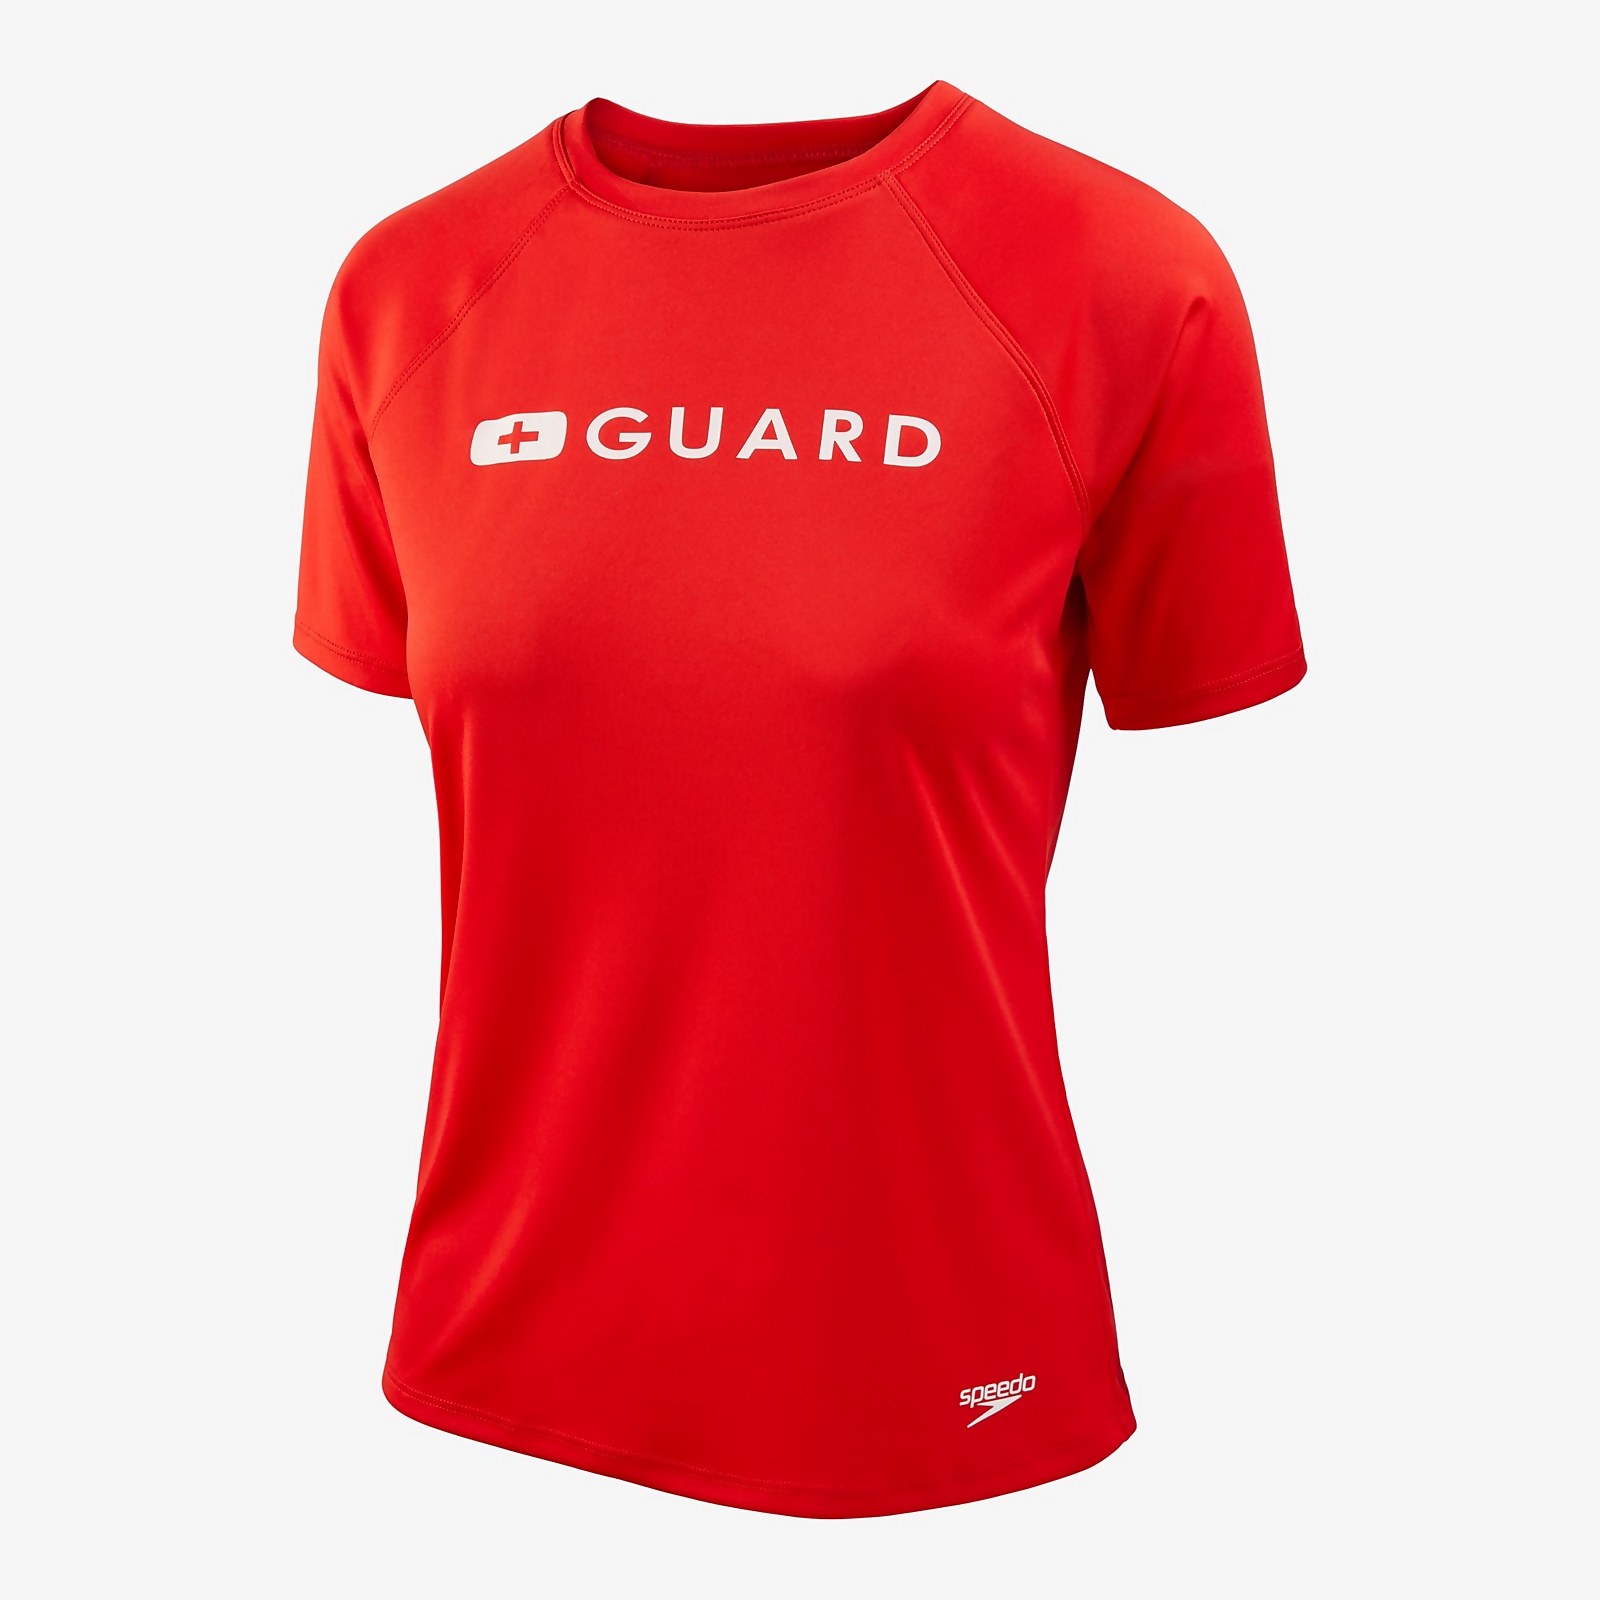 Speedo  Guard Solid Swim Tee - L    : Red